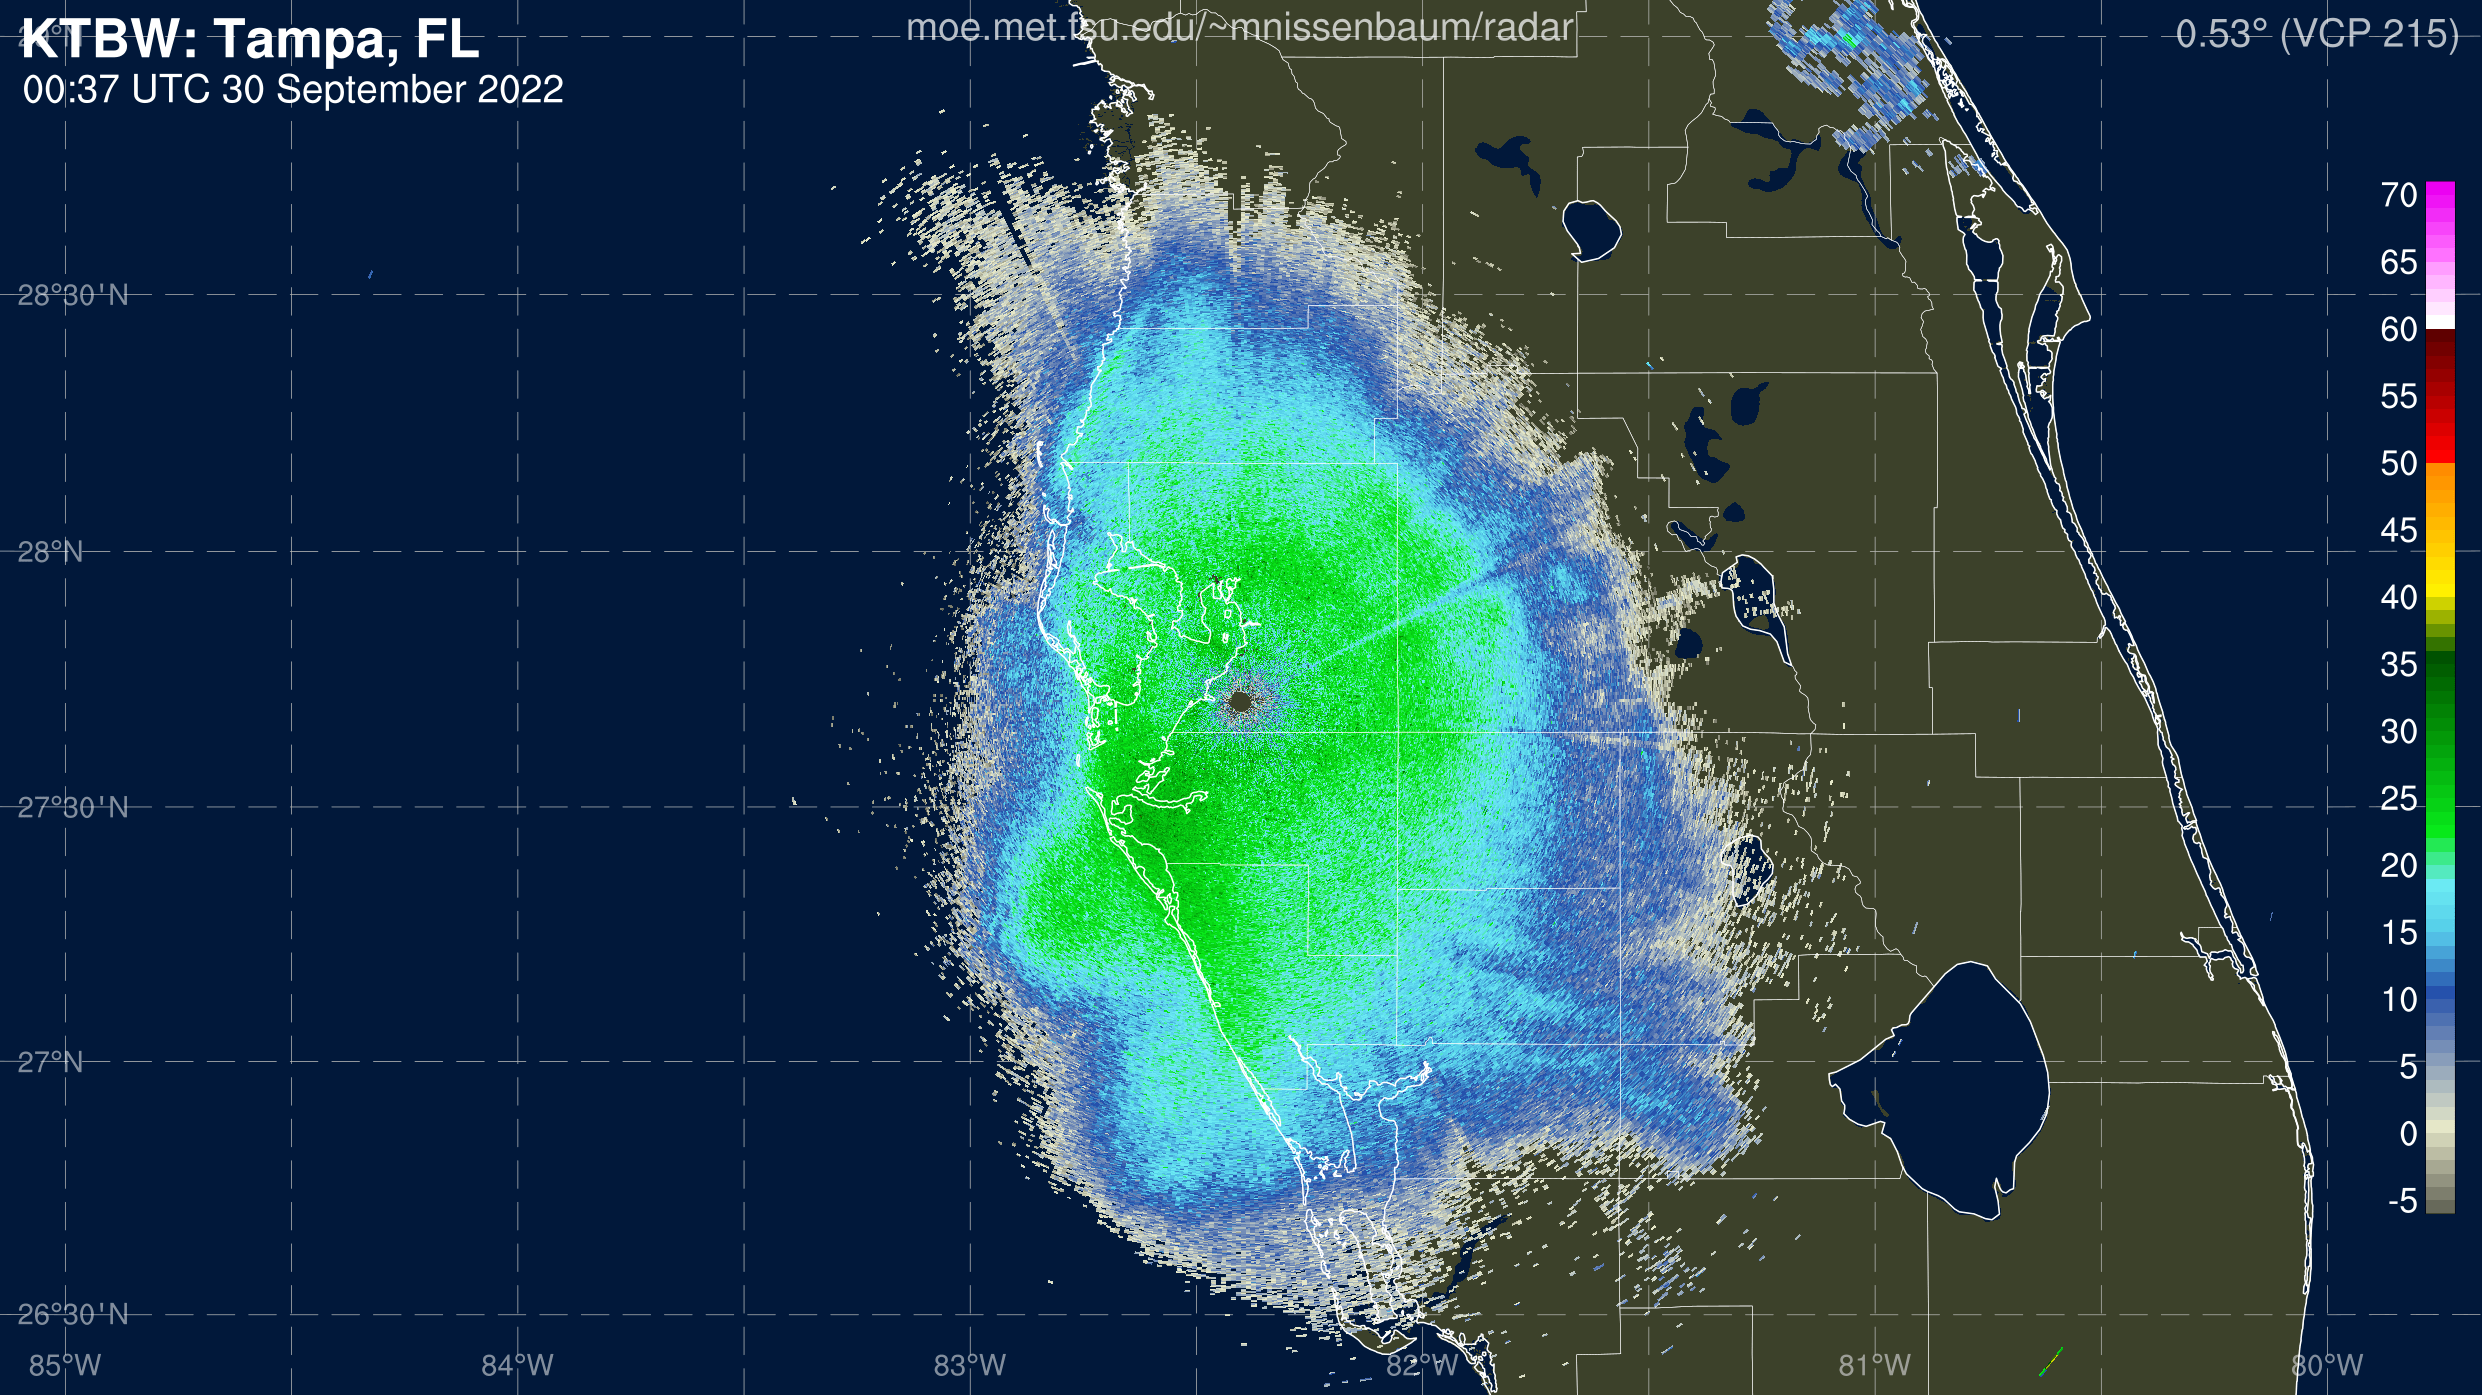 Tampa Radar Recording of Ian (2022) Approach